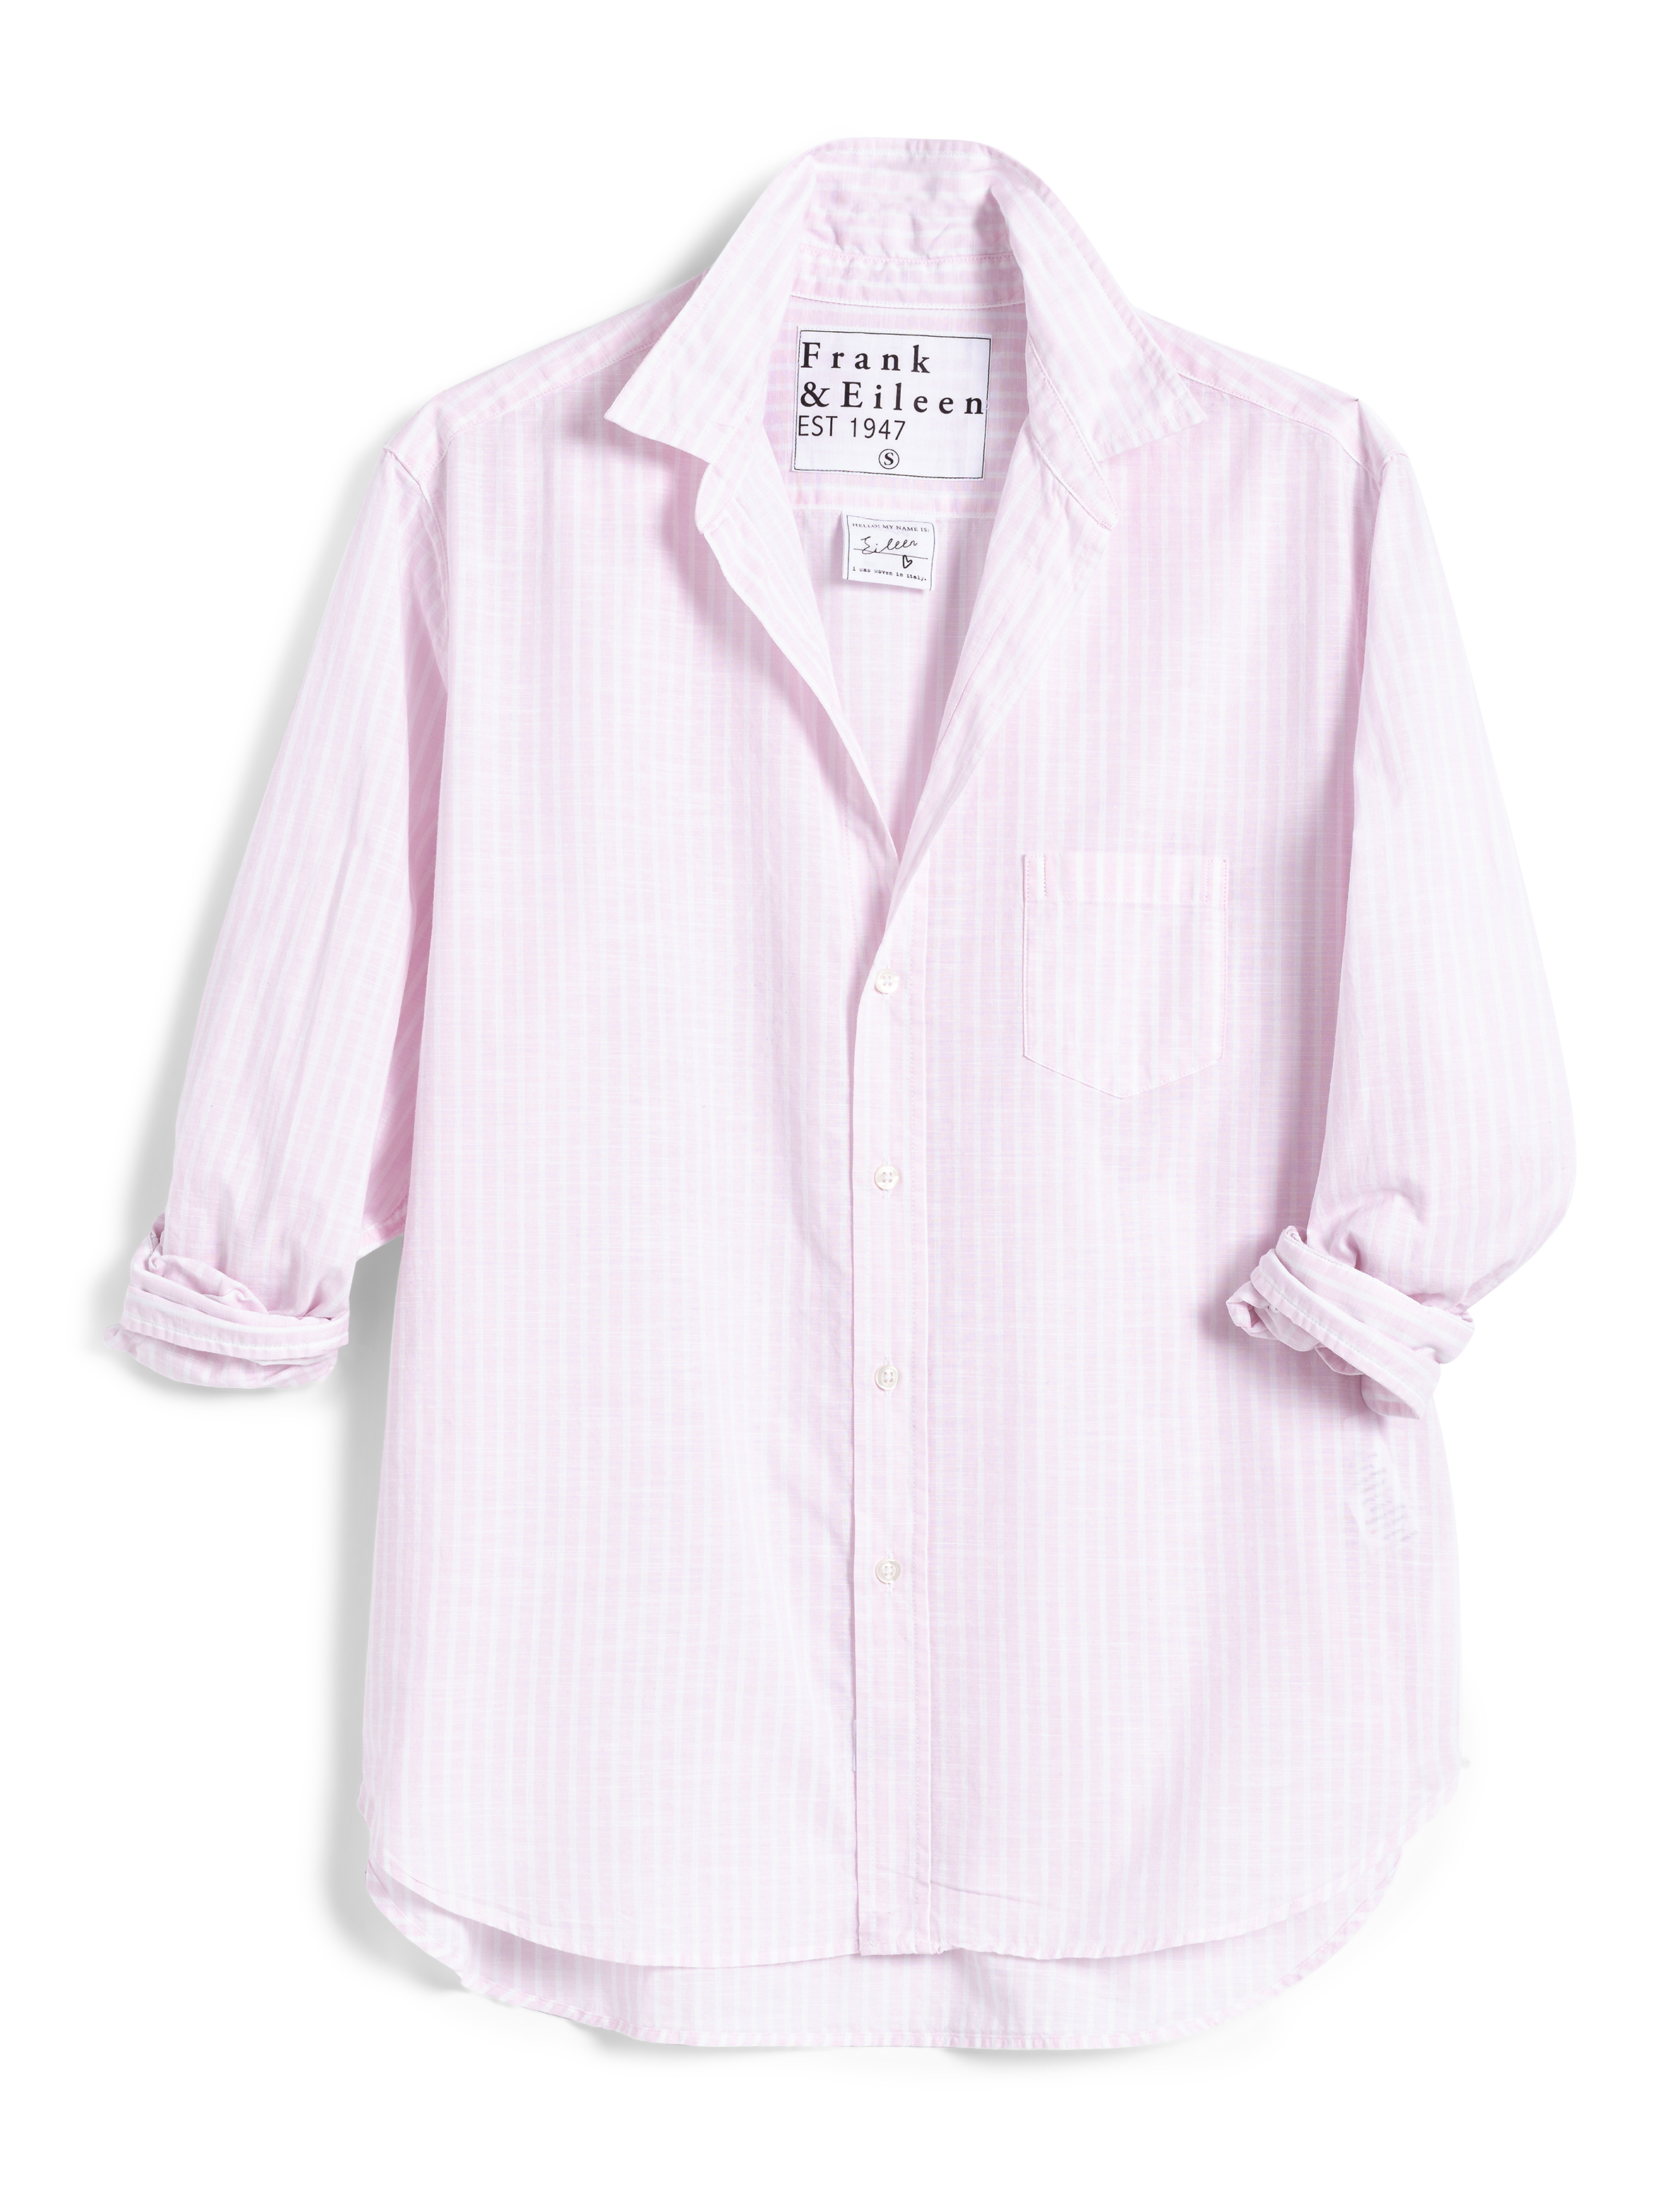 Frank & Eileen - Eileen Woven Button Up in Soft Pink, White Stripe